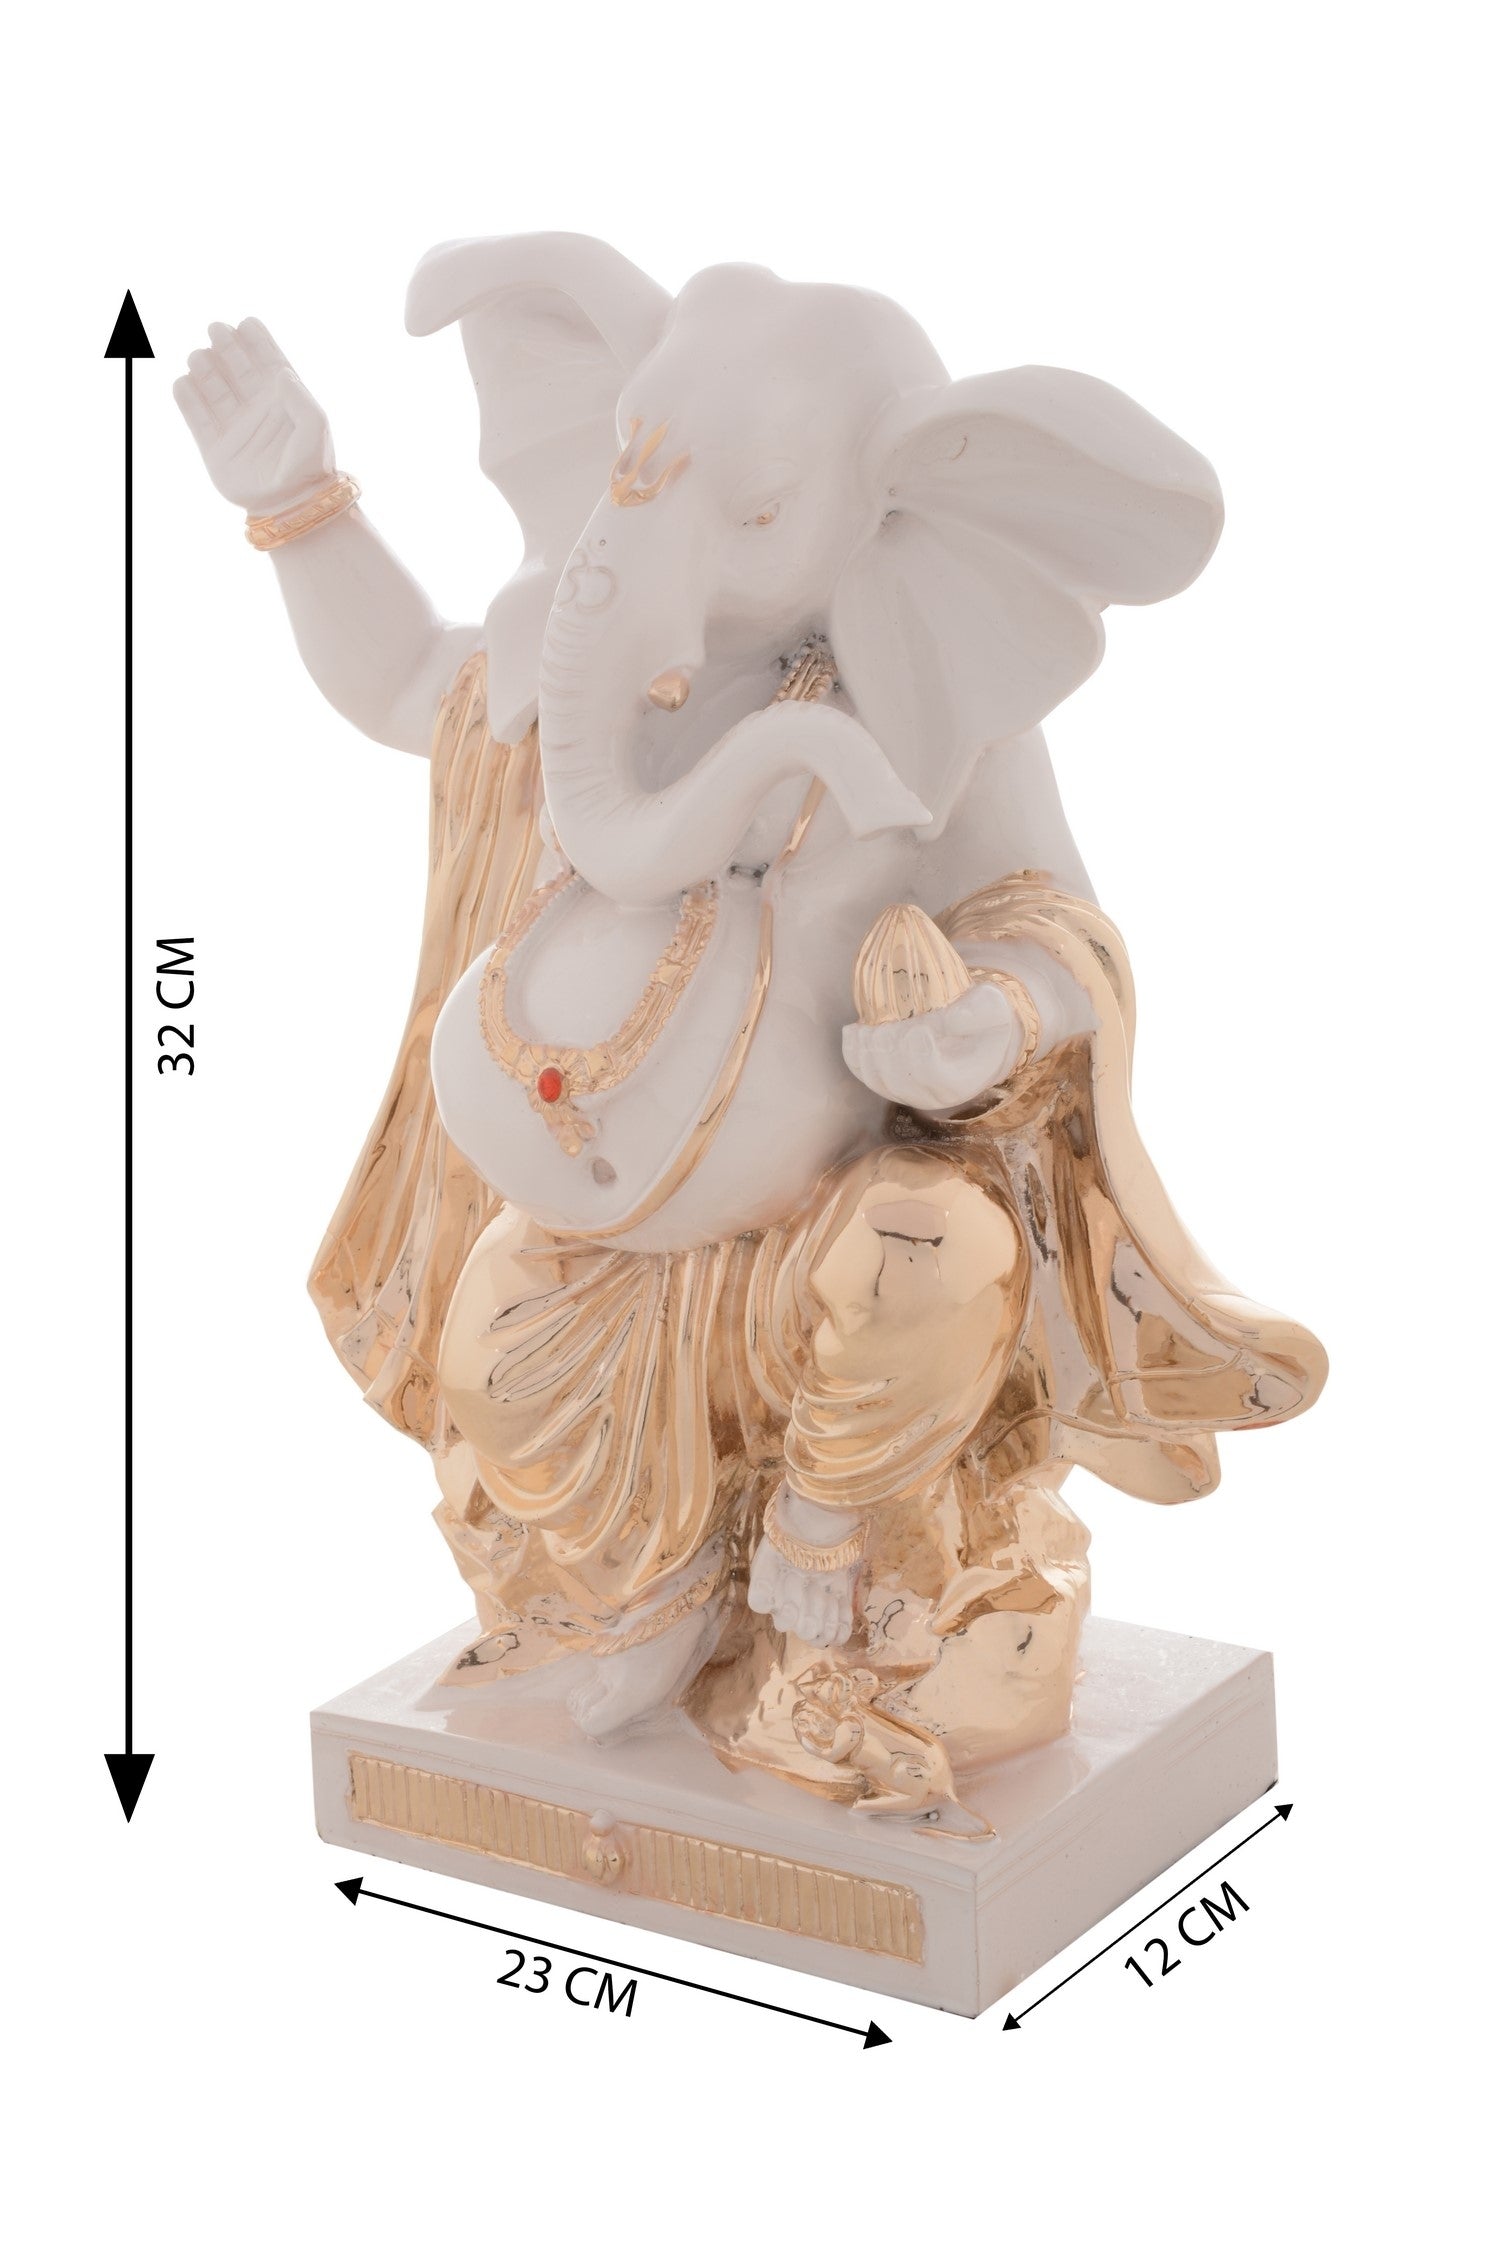 Premium Figurine of Lord Ganesha in Dancing Position 1